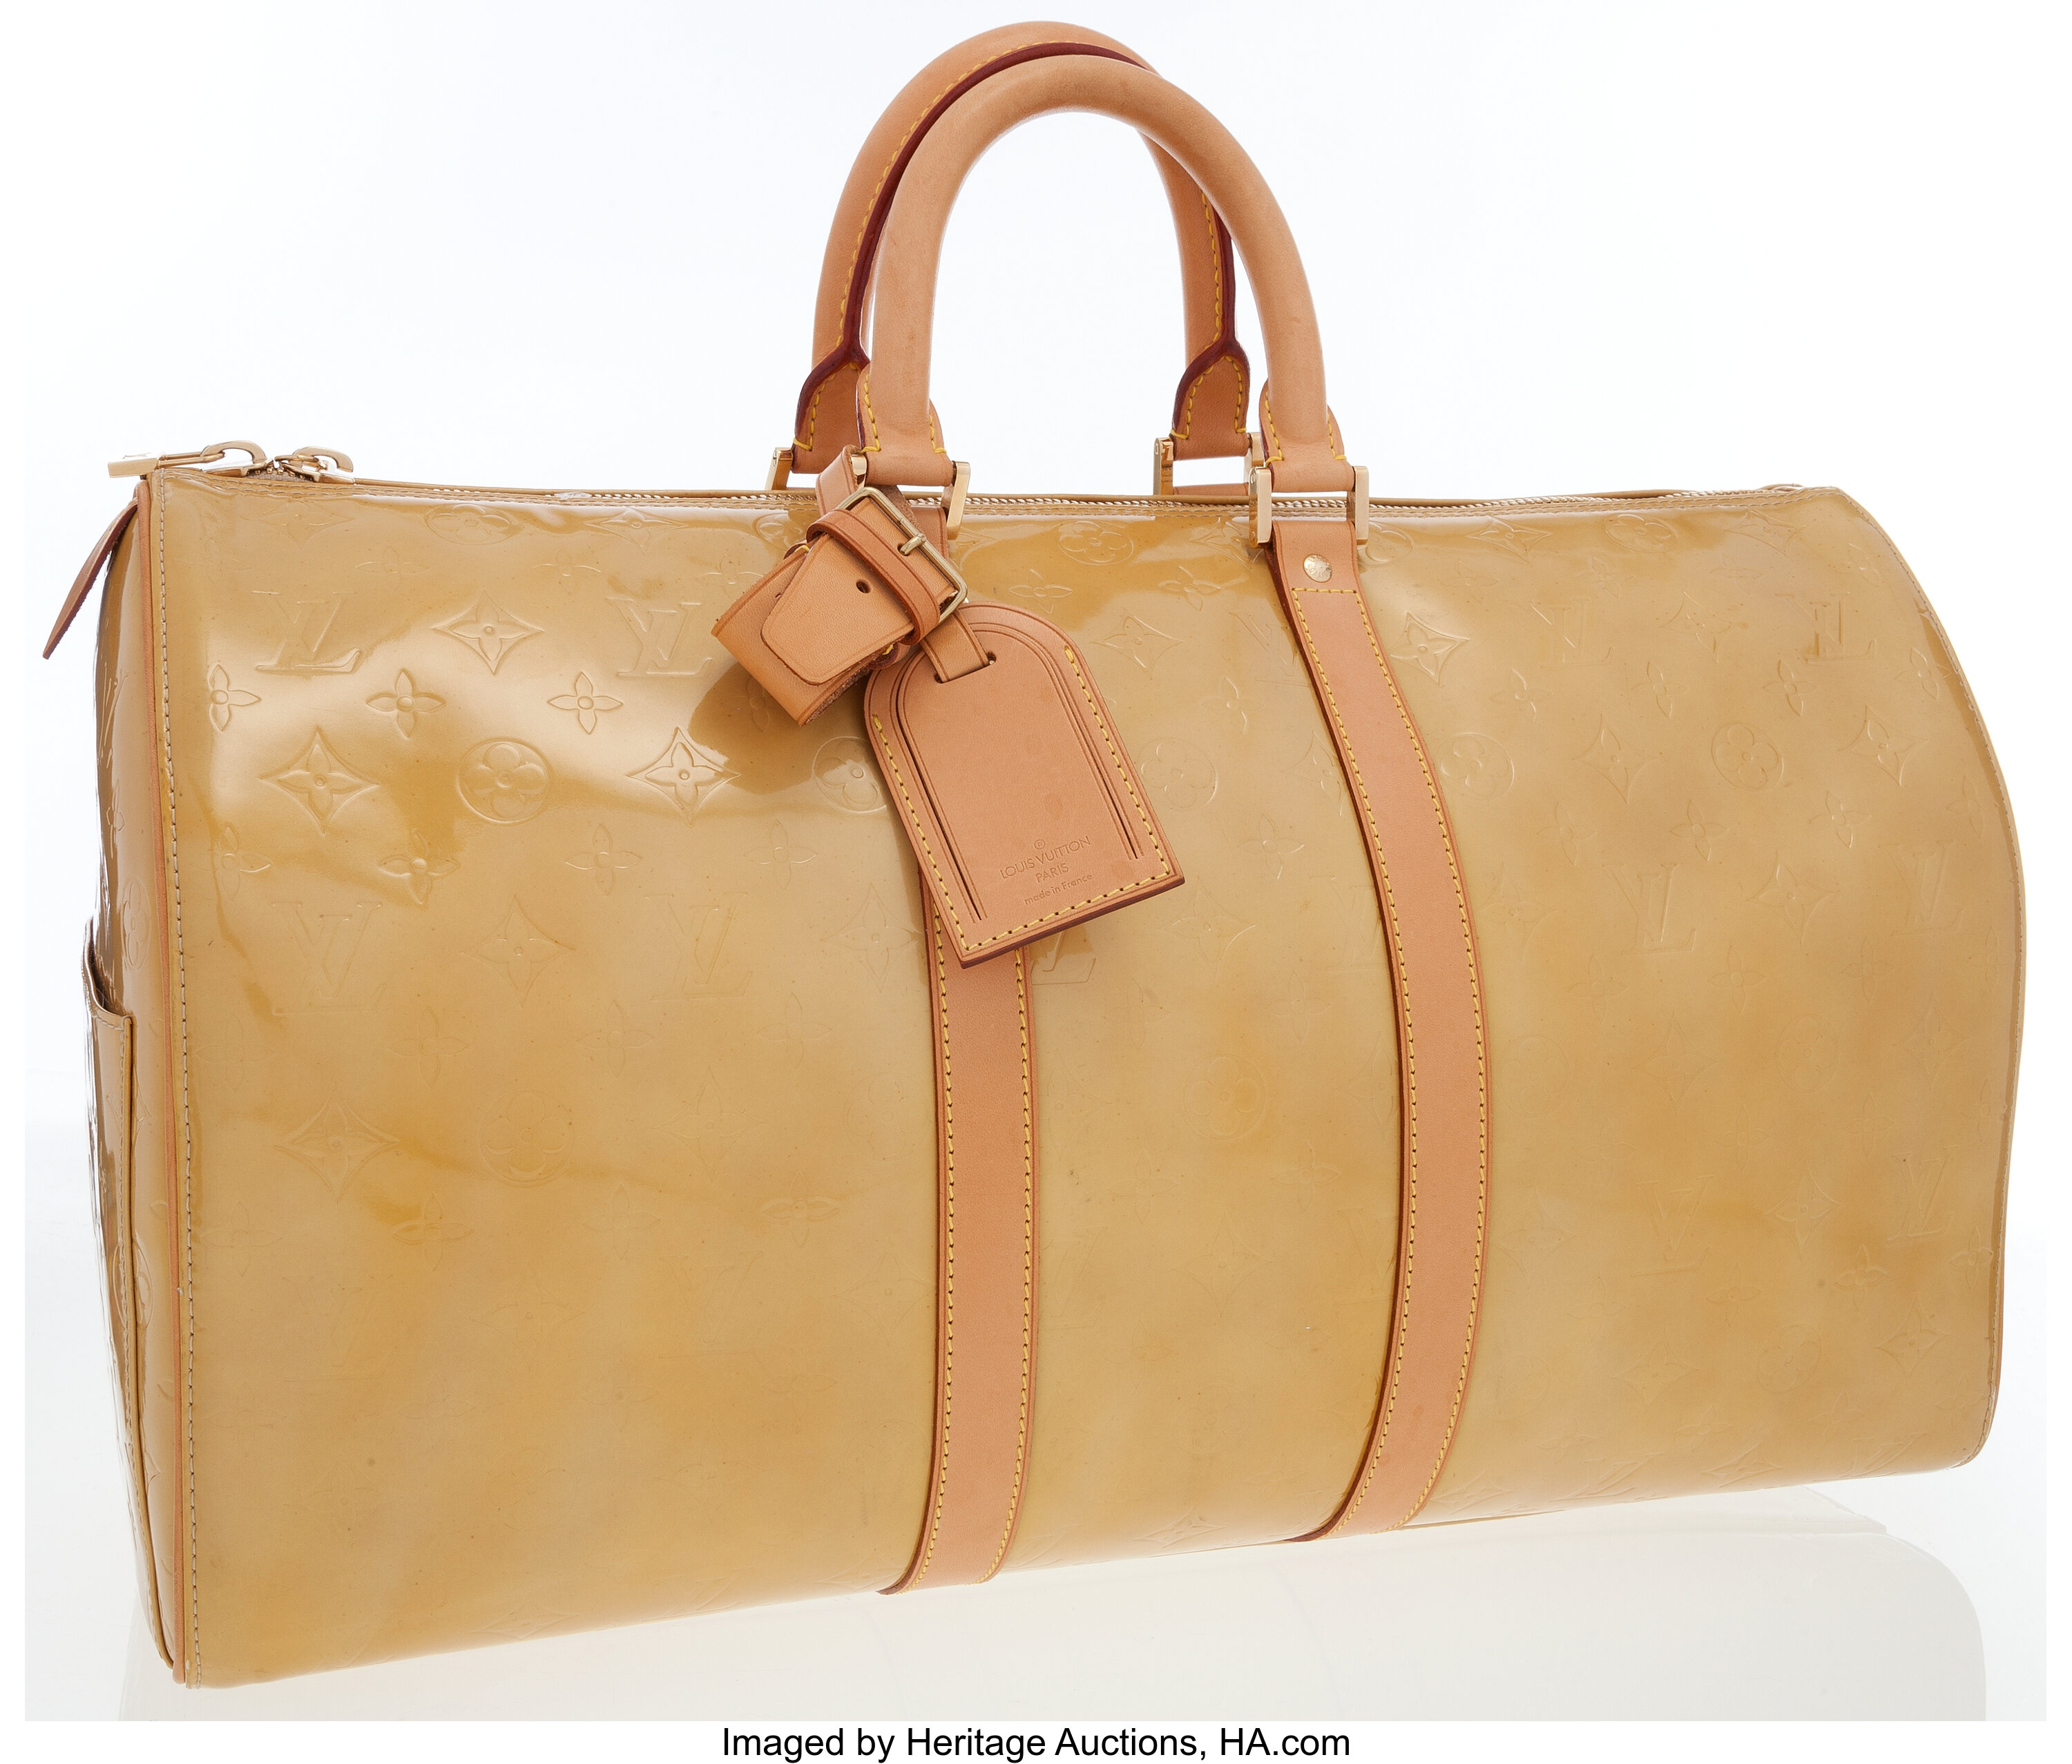 Sold at Auction: Louis Vuitton LV Monogram Weekender Travel Bag